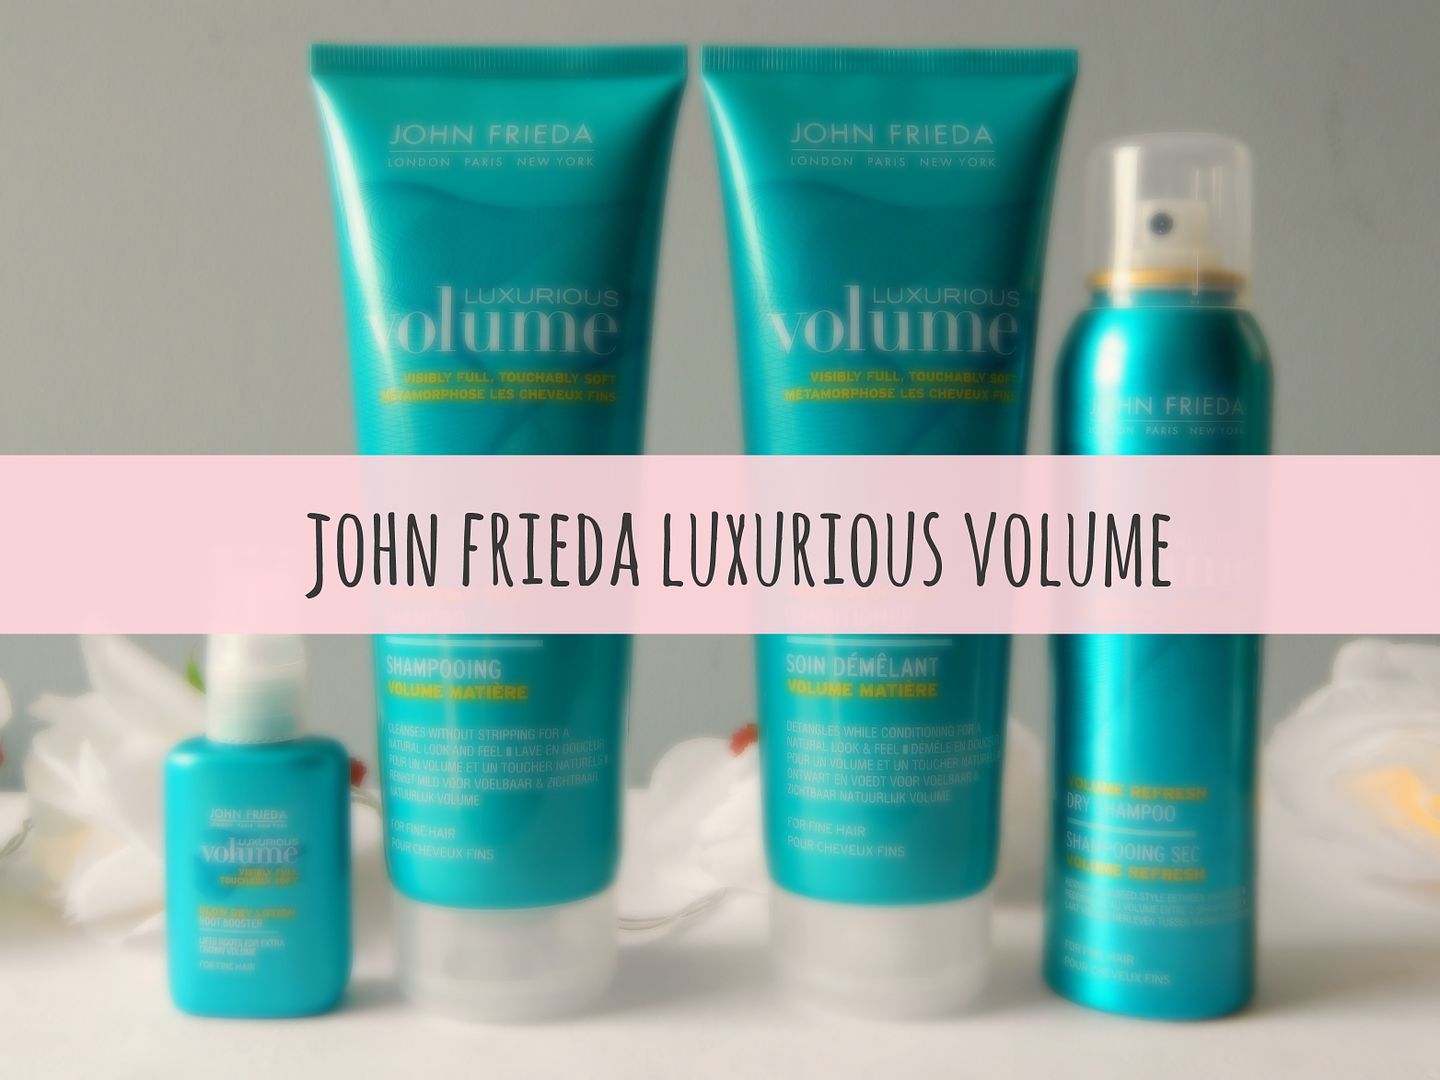 John Frieda Luxurious Volume Hair Care Products